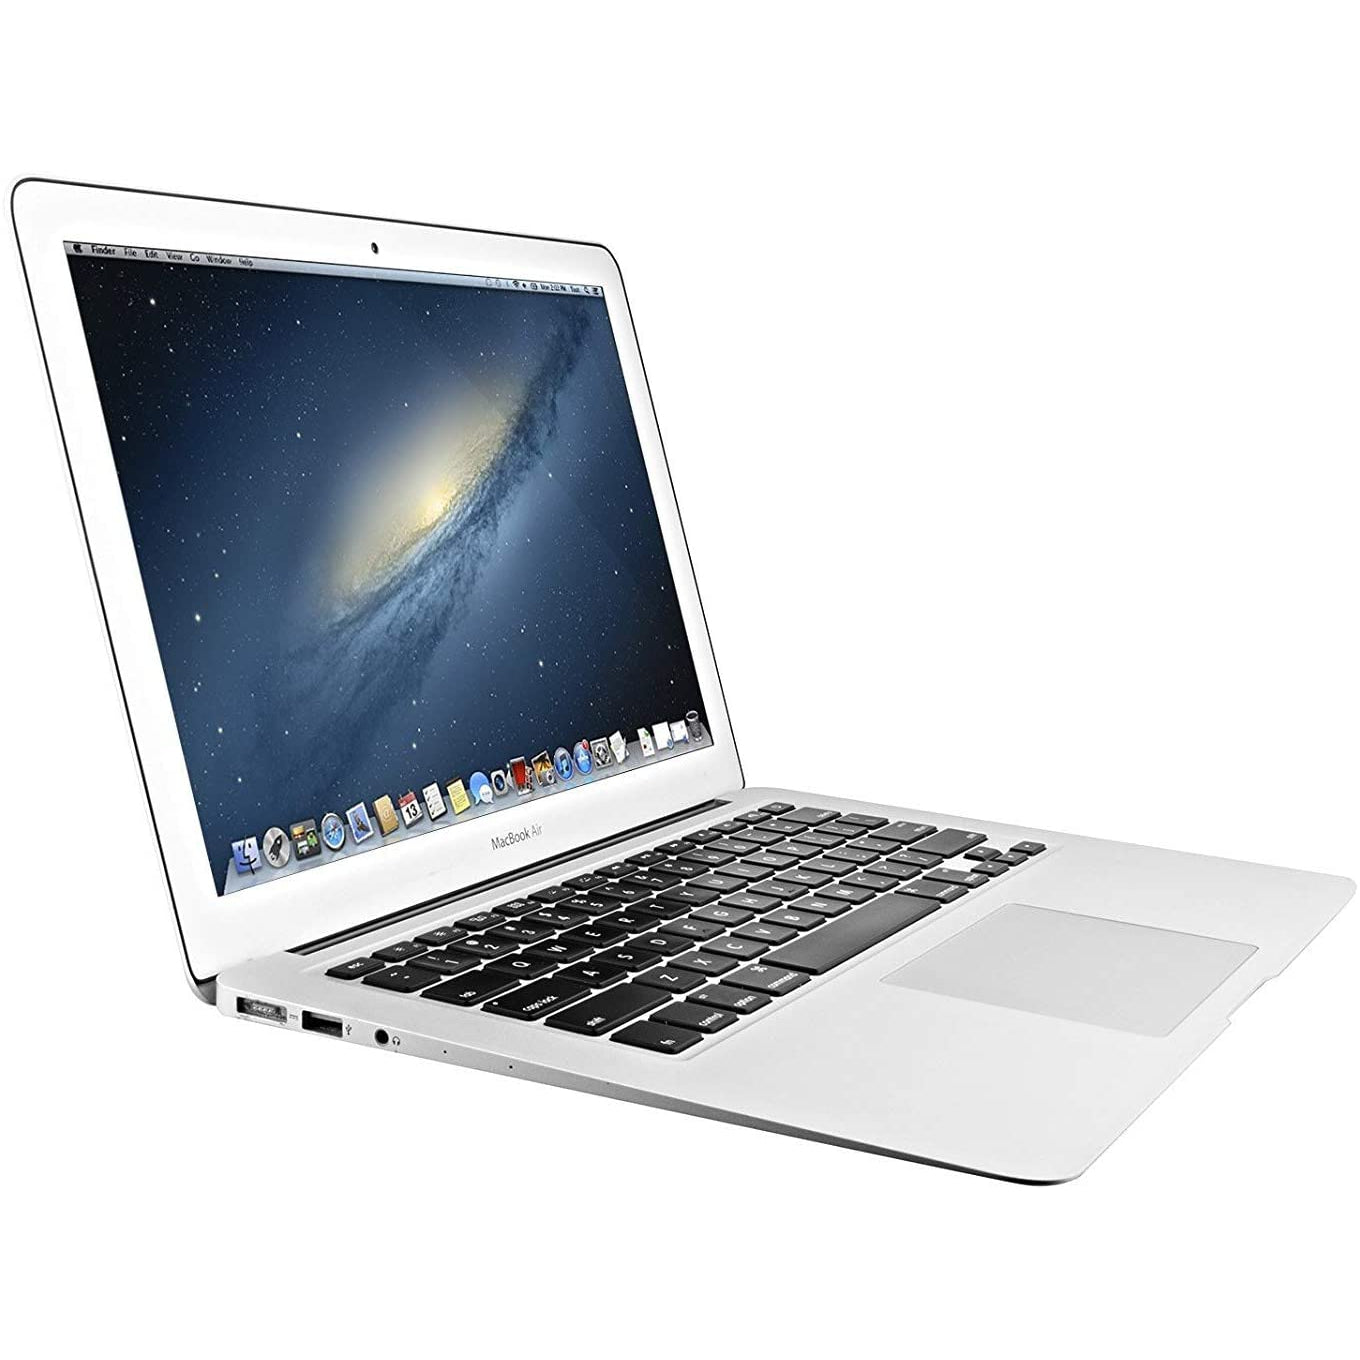 Apple MacBook Air 13.3'' MD231LL/A (2012) Intel Core i5, 4GB RAM, 128GB, Silver - Refurbished Excellent